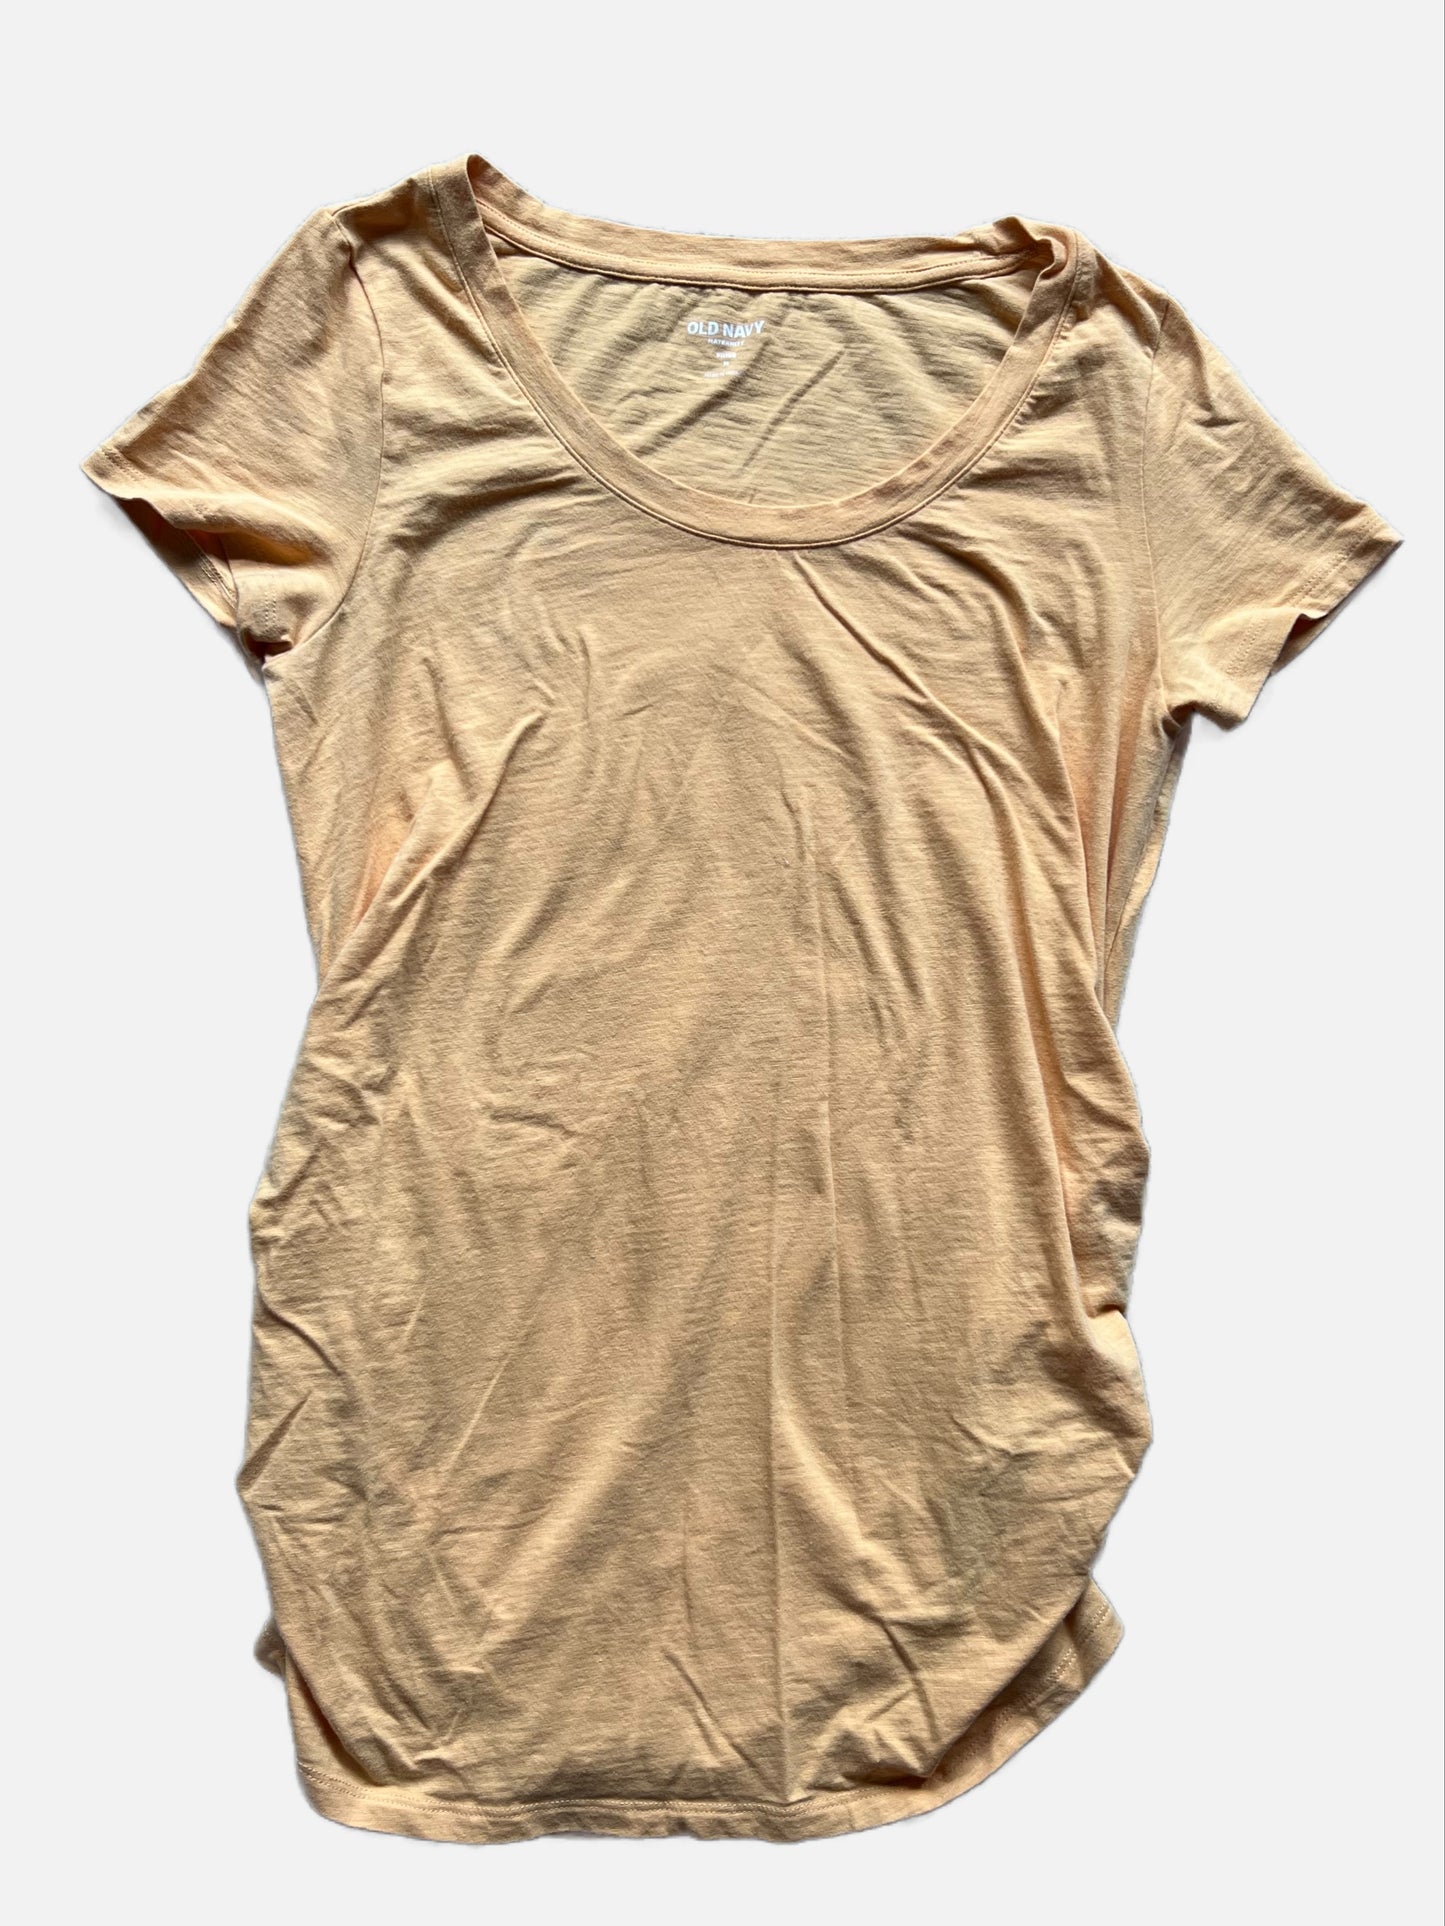 Old Navy maternity shirt, medium, NWOT